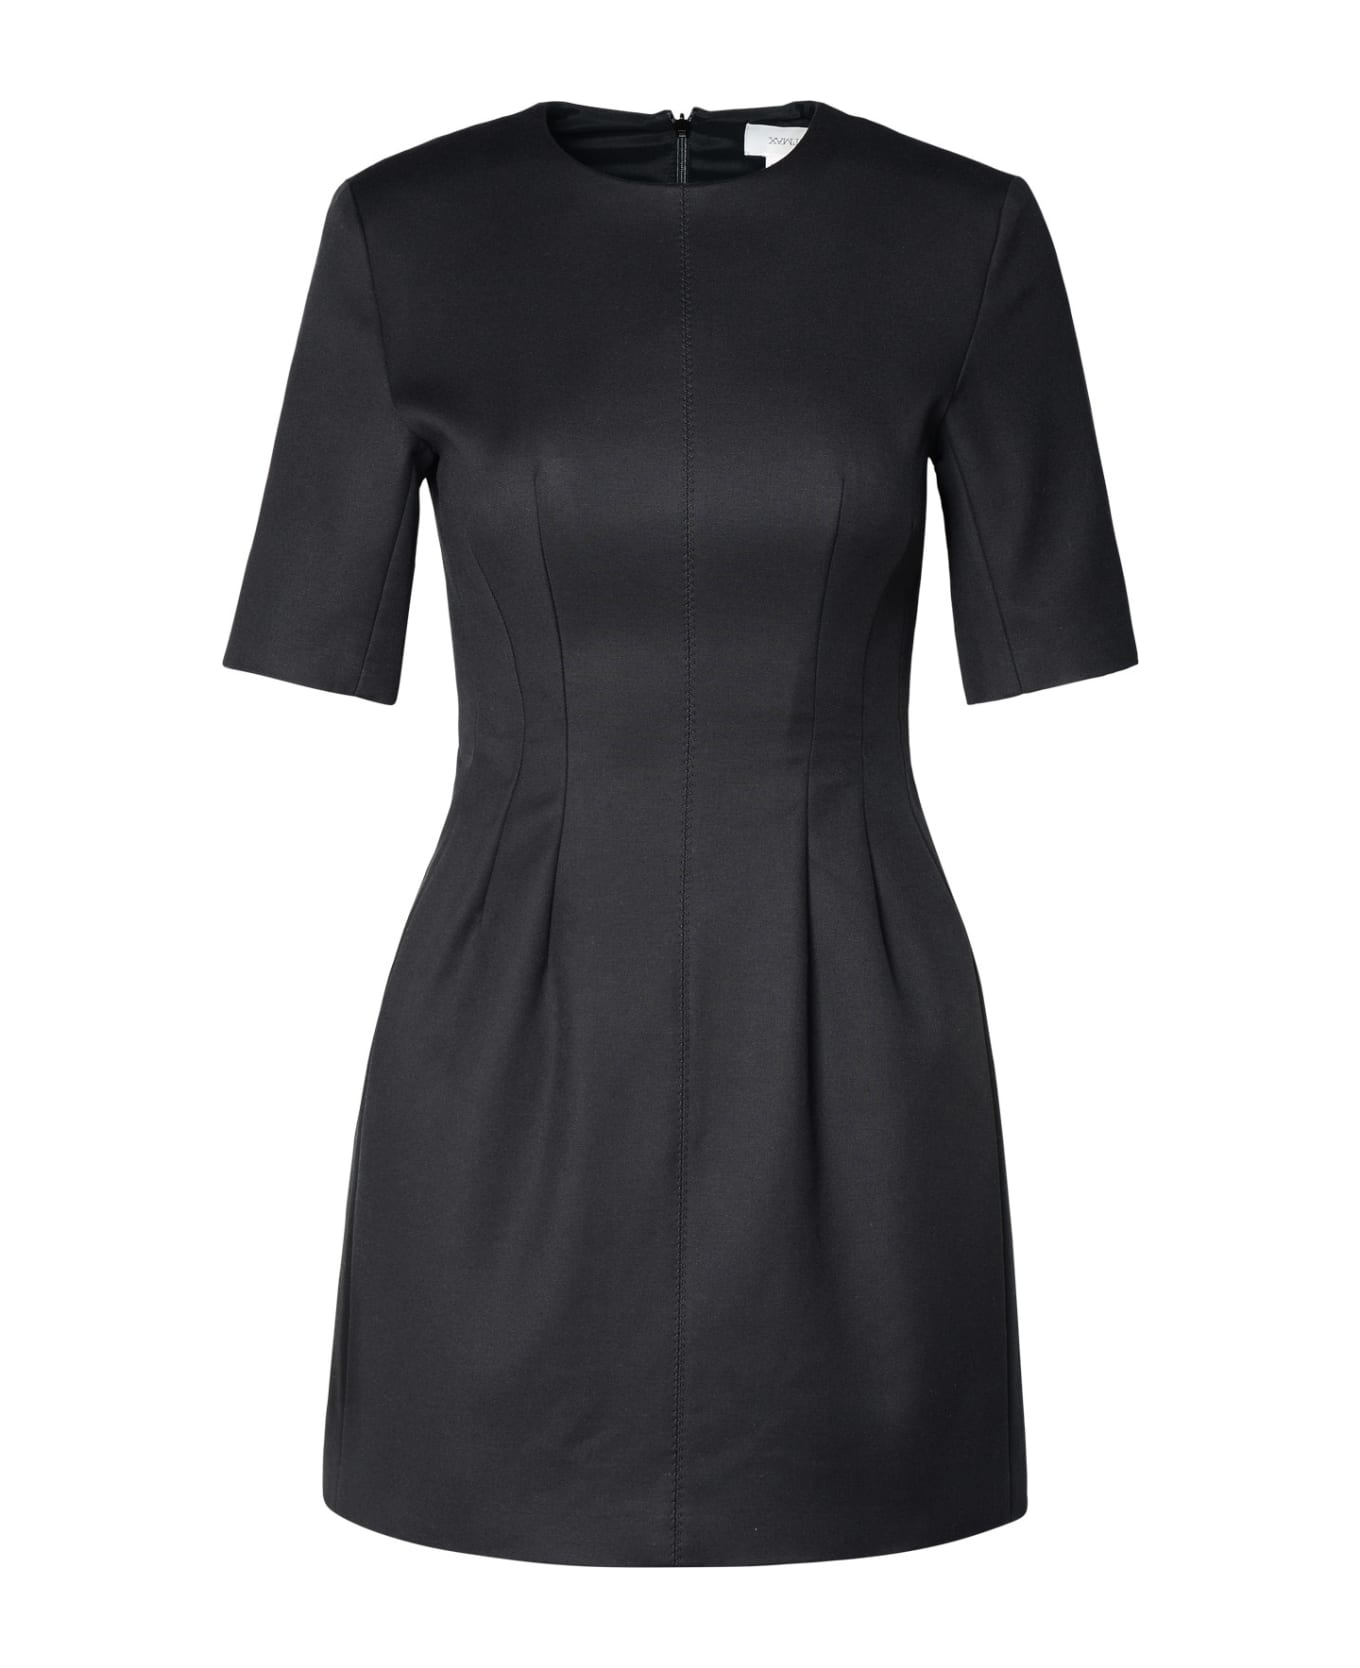 SportMax 'colomba' Black Cotton Blend Dress - Black